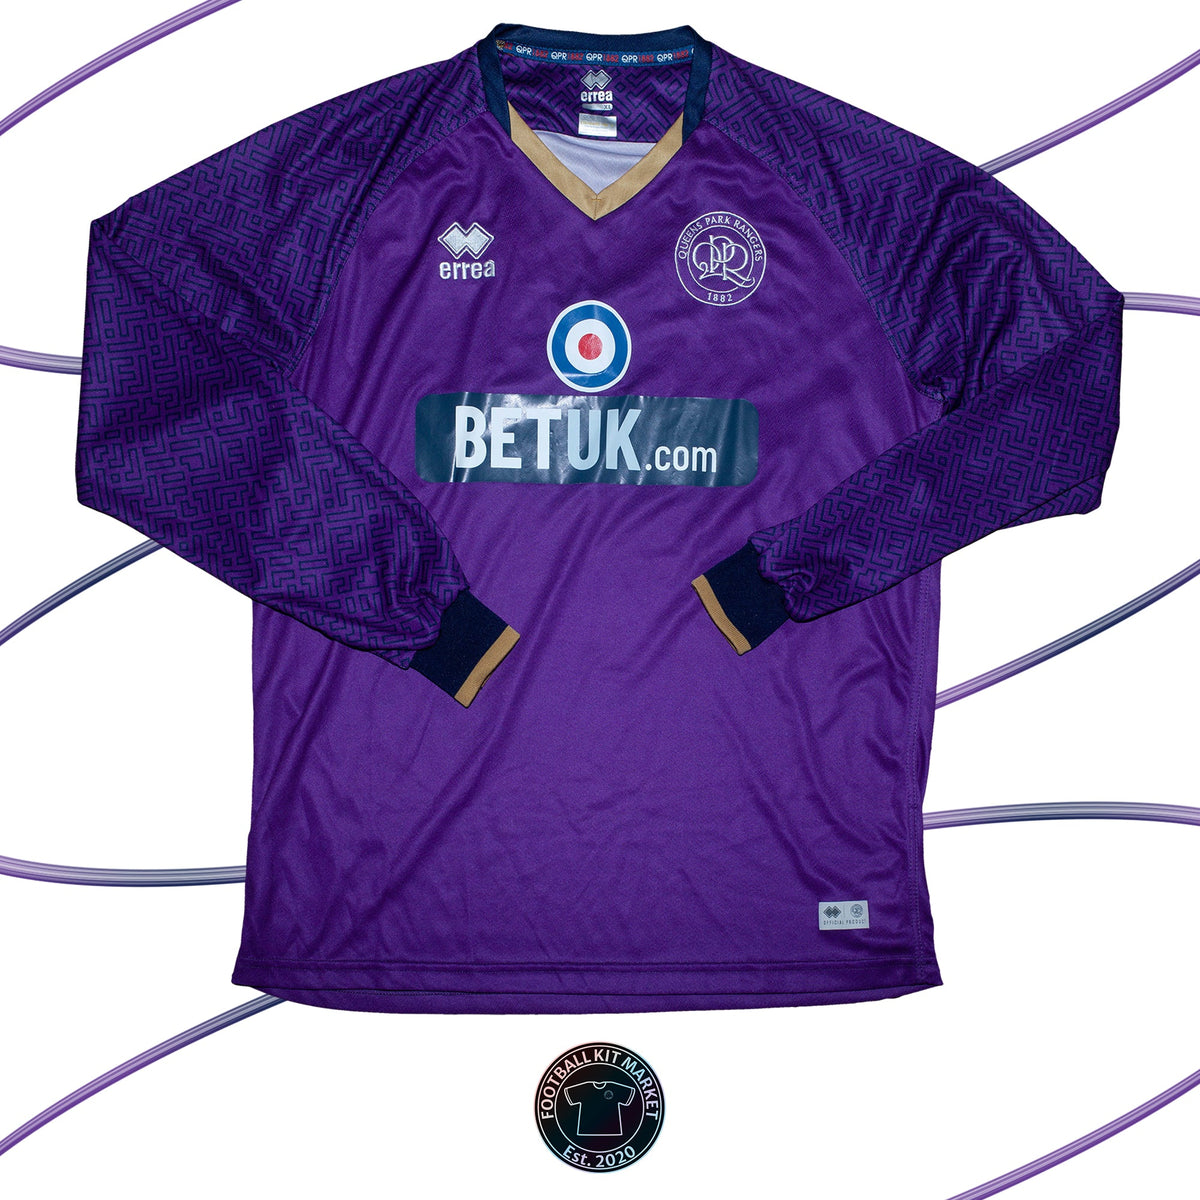 Genuine QUEENS PARK RANGERS Goalkeeper Shirt (inc. socks and shorts) (2019-2020) - ERREA (XL) - Product Image from Football Kit Market